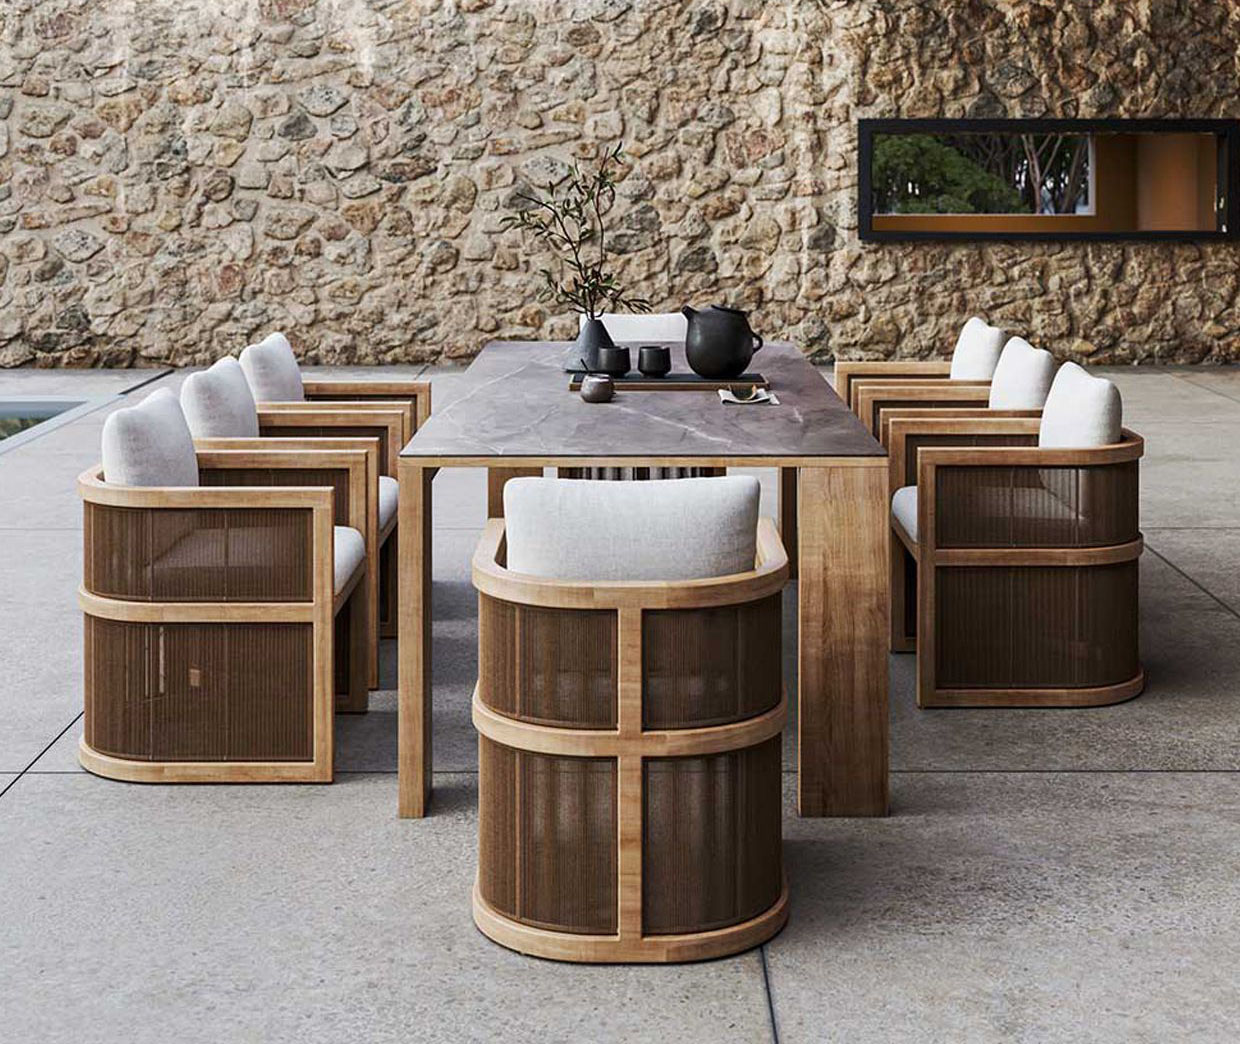 Courtyard Table And Chair Hotel Villa Aluminium Outdoor Furniture